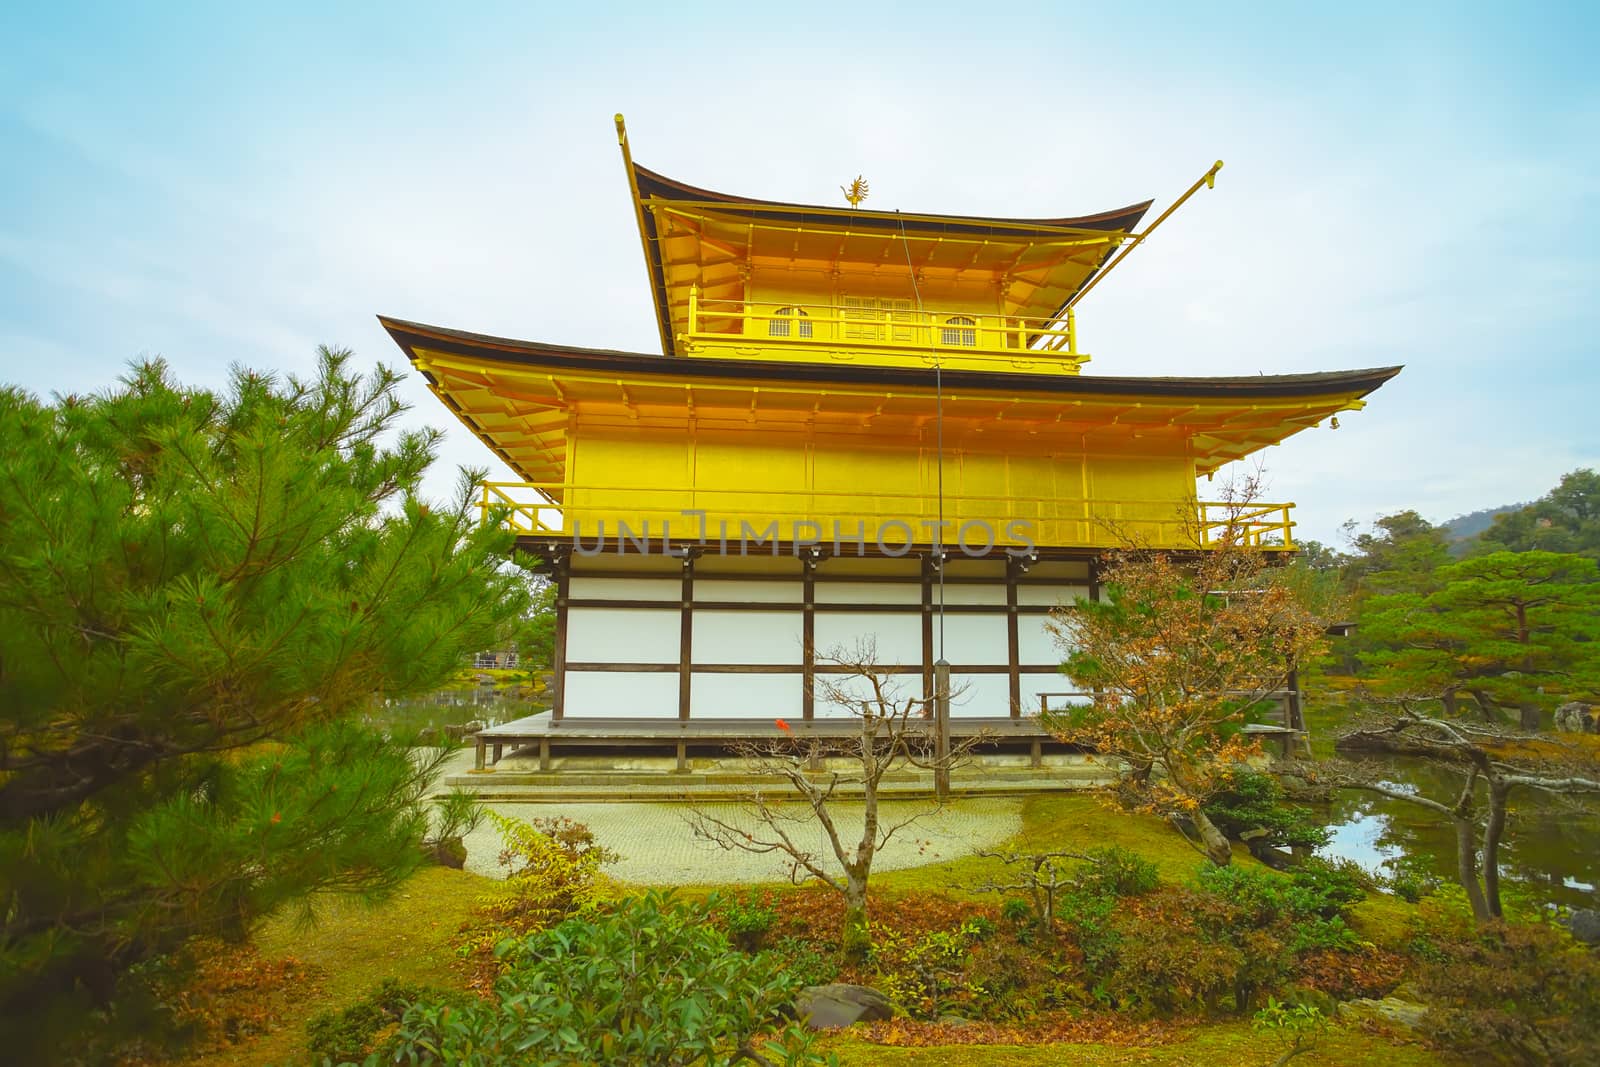 The famous Golden Pavilion in Kinkakuji temple in Kyoto, Japan.